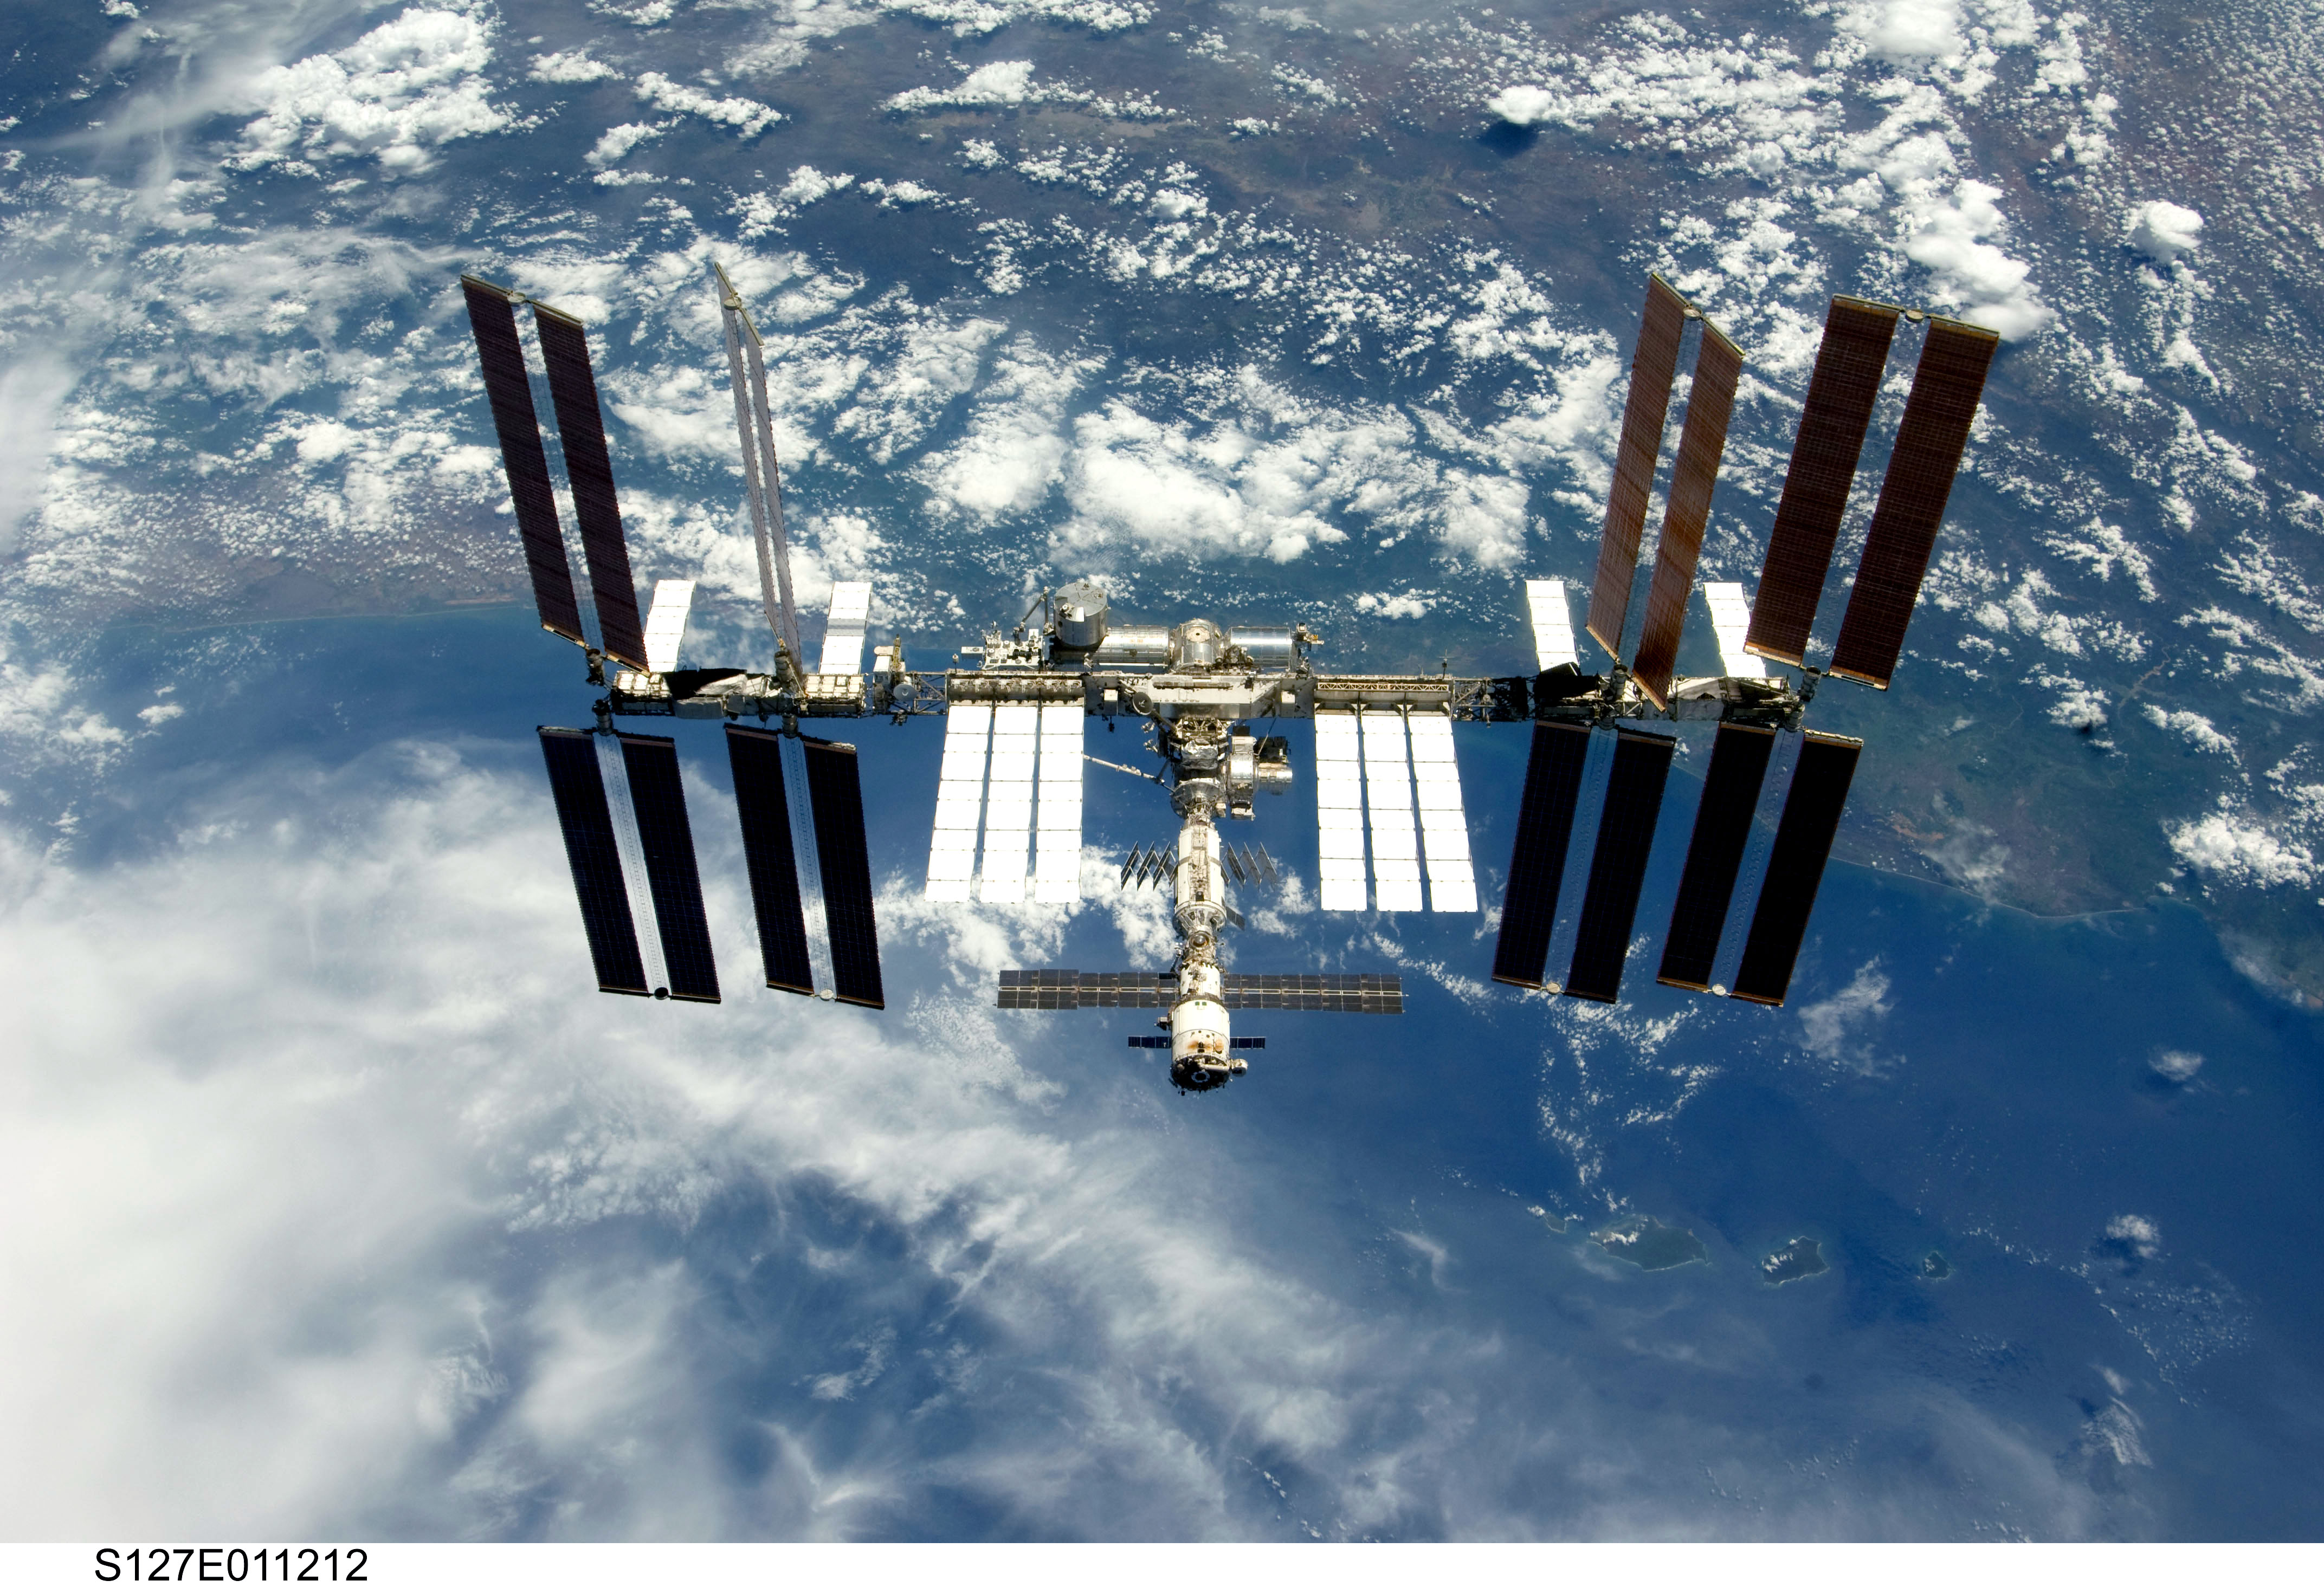 Движущаяся мкс. Космическая станция МКС. Космический Спутник МКС. МКС станция Союз. Вид со станции МКС.